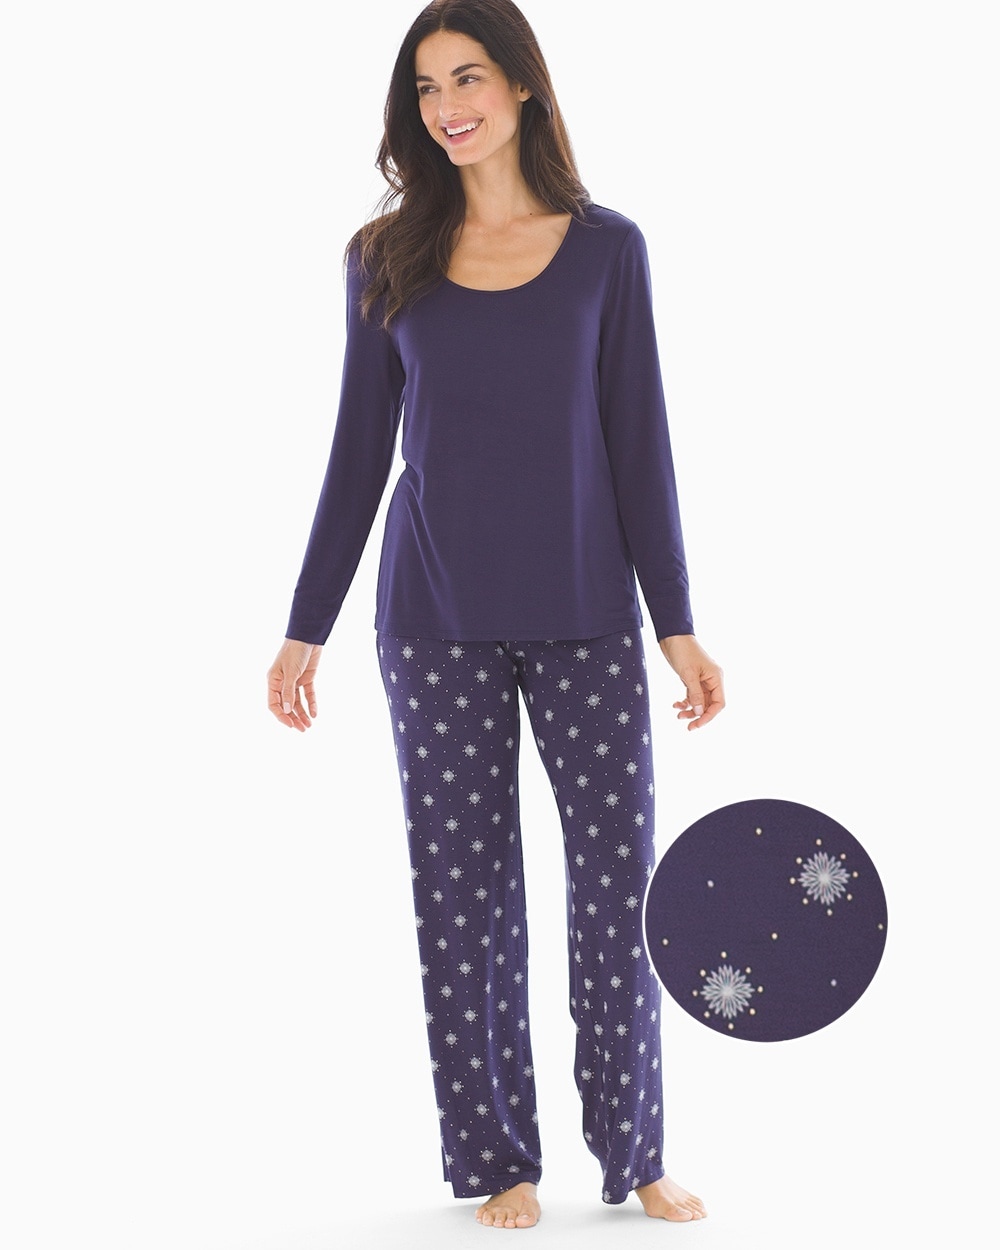 Cool Nights Long Sleeve Pajama Set Snowflakes with Navy RG